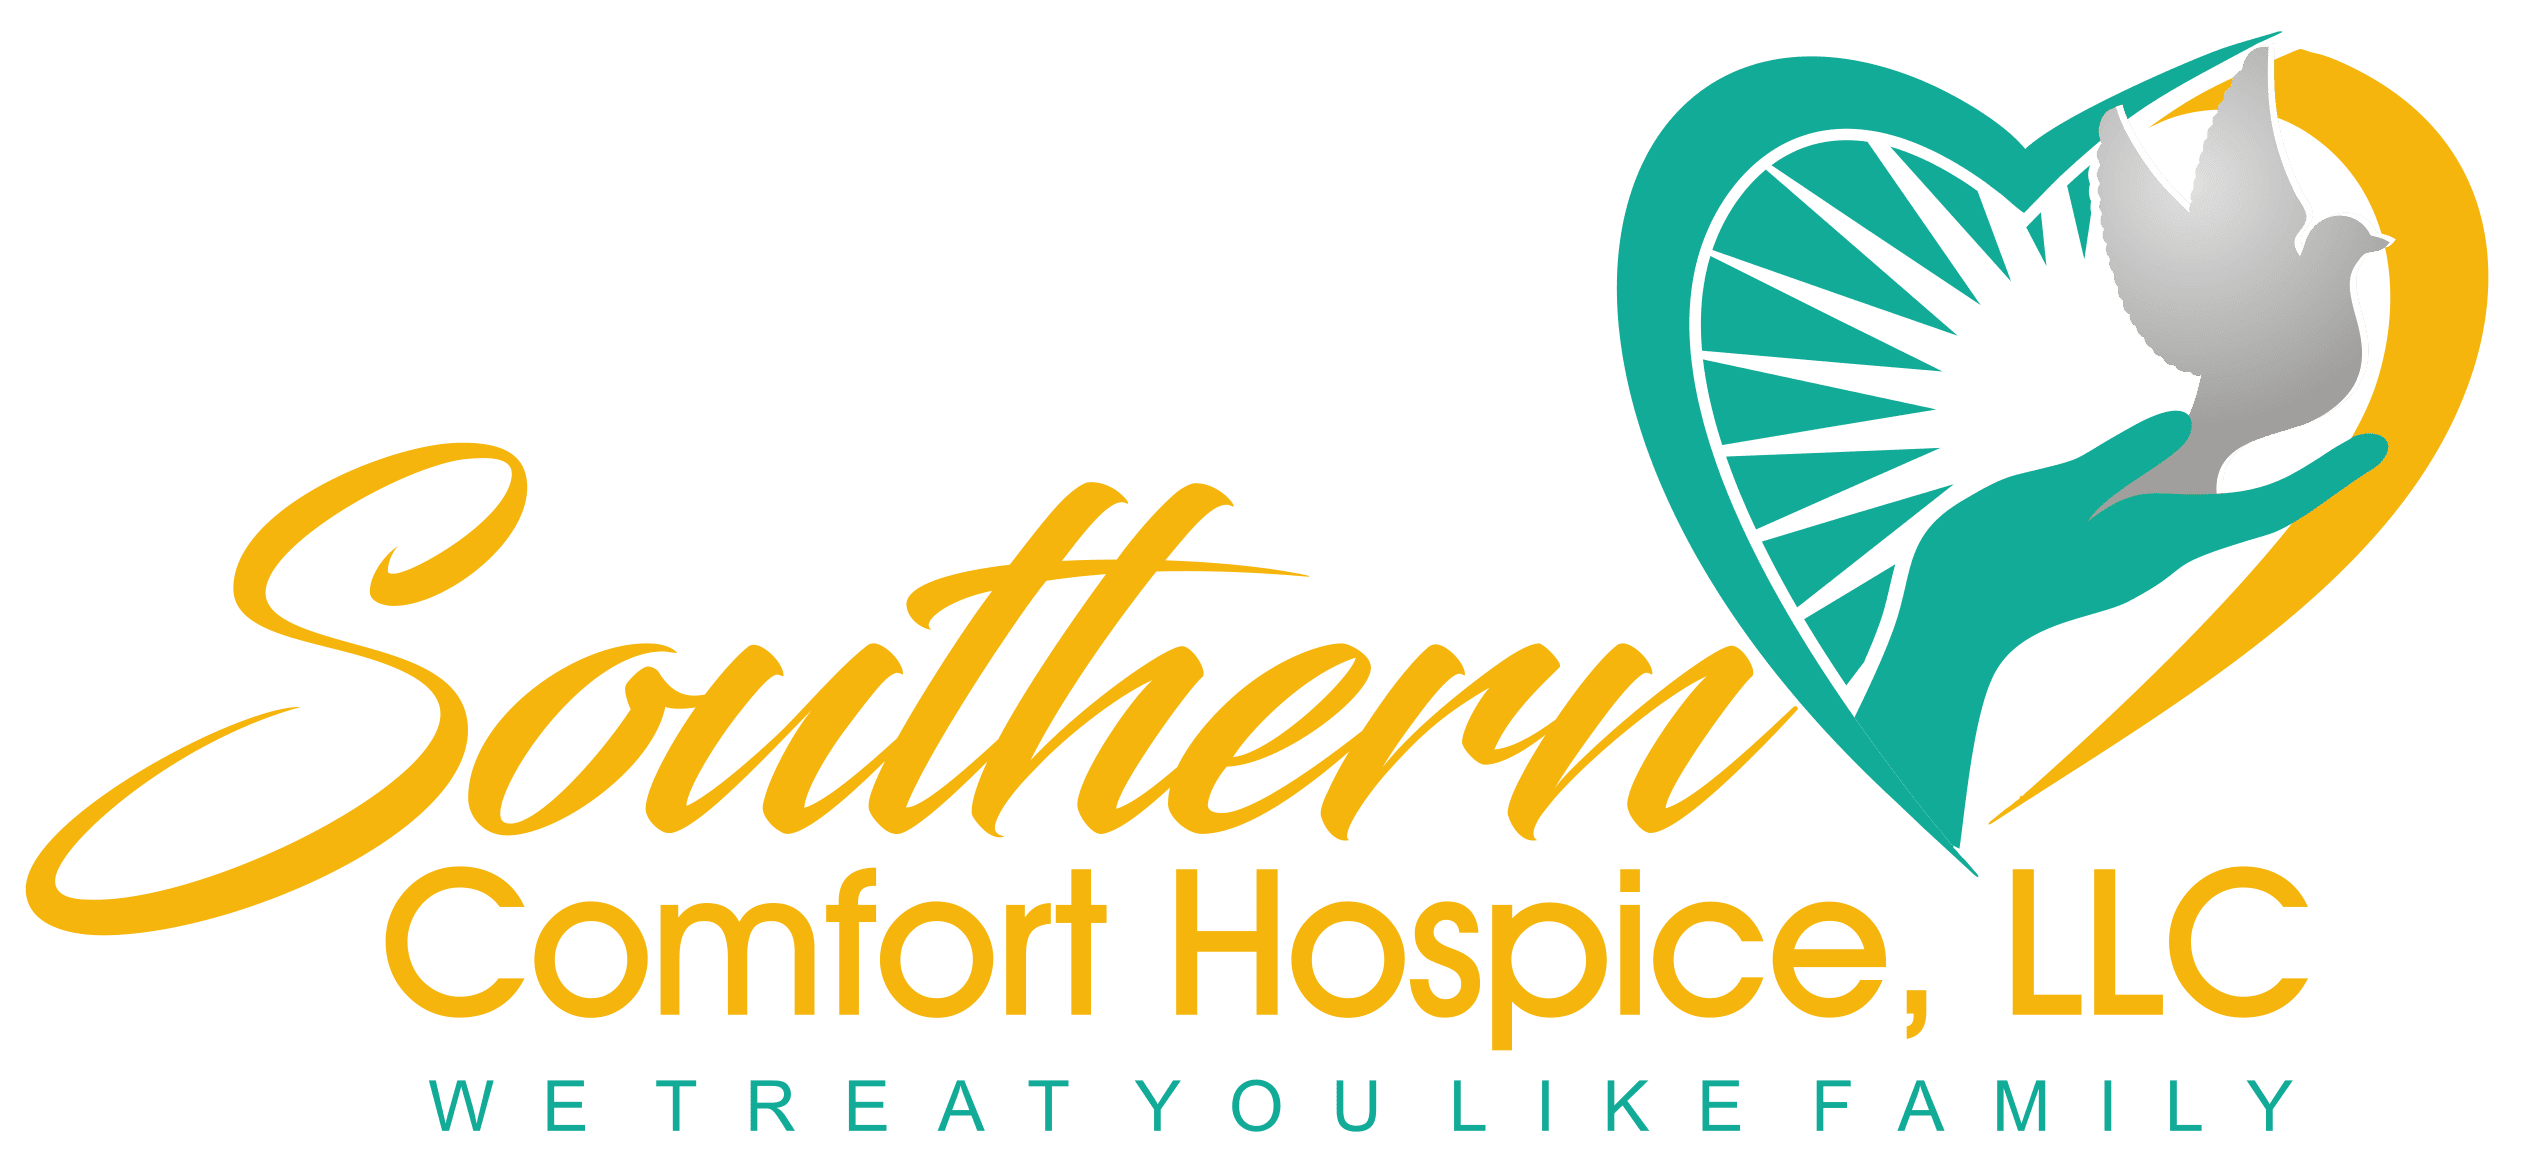 Southern Comfort Hospice, LLC